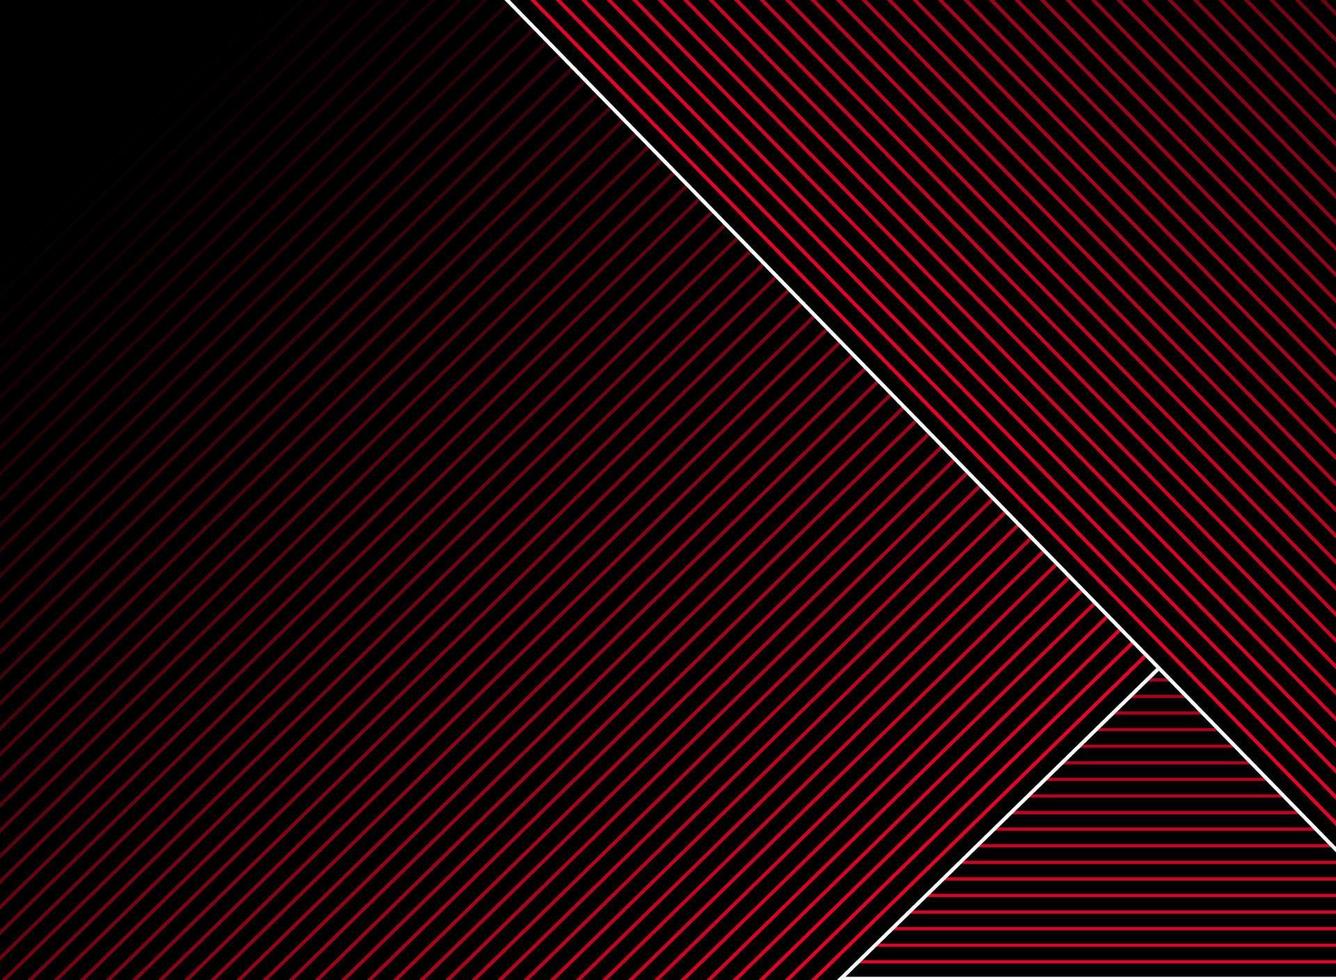 Superposición de patrón de líneas rojas a rayas abstractas sobre fondo negro y textura. diseño geométrico creativo e inspiración. vector